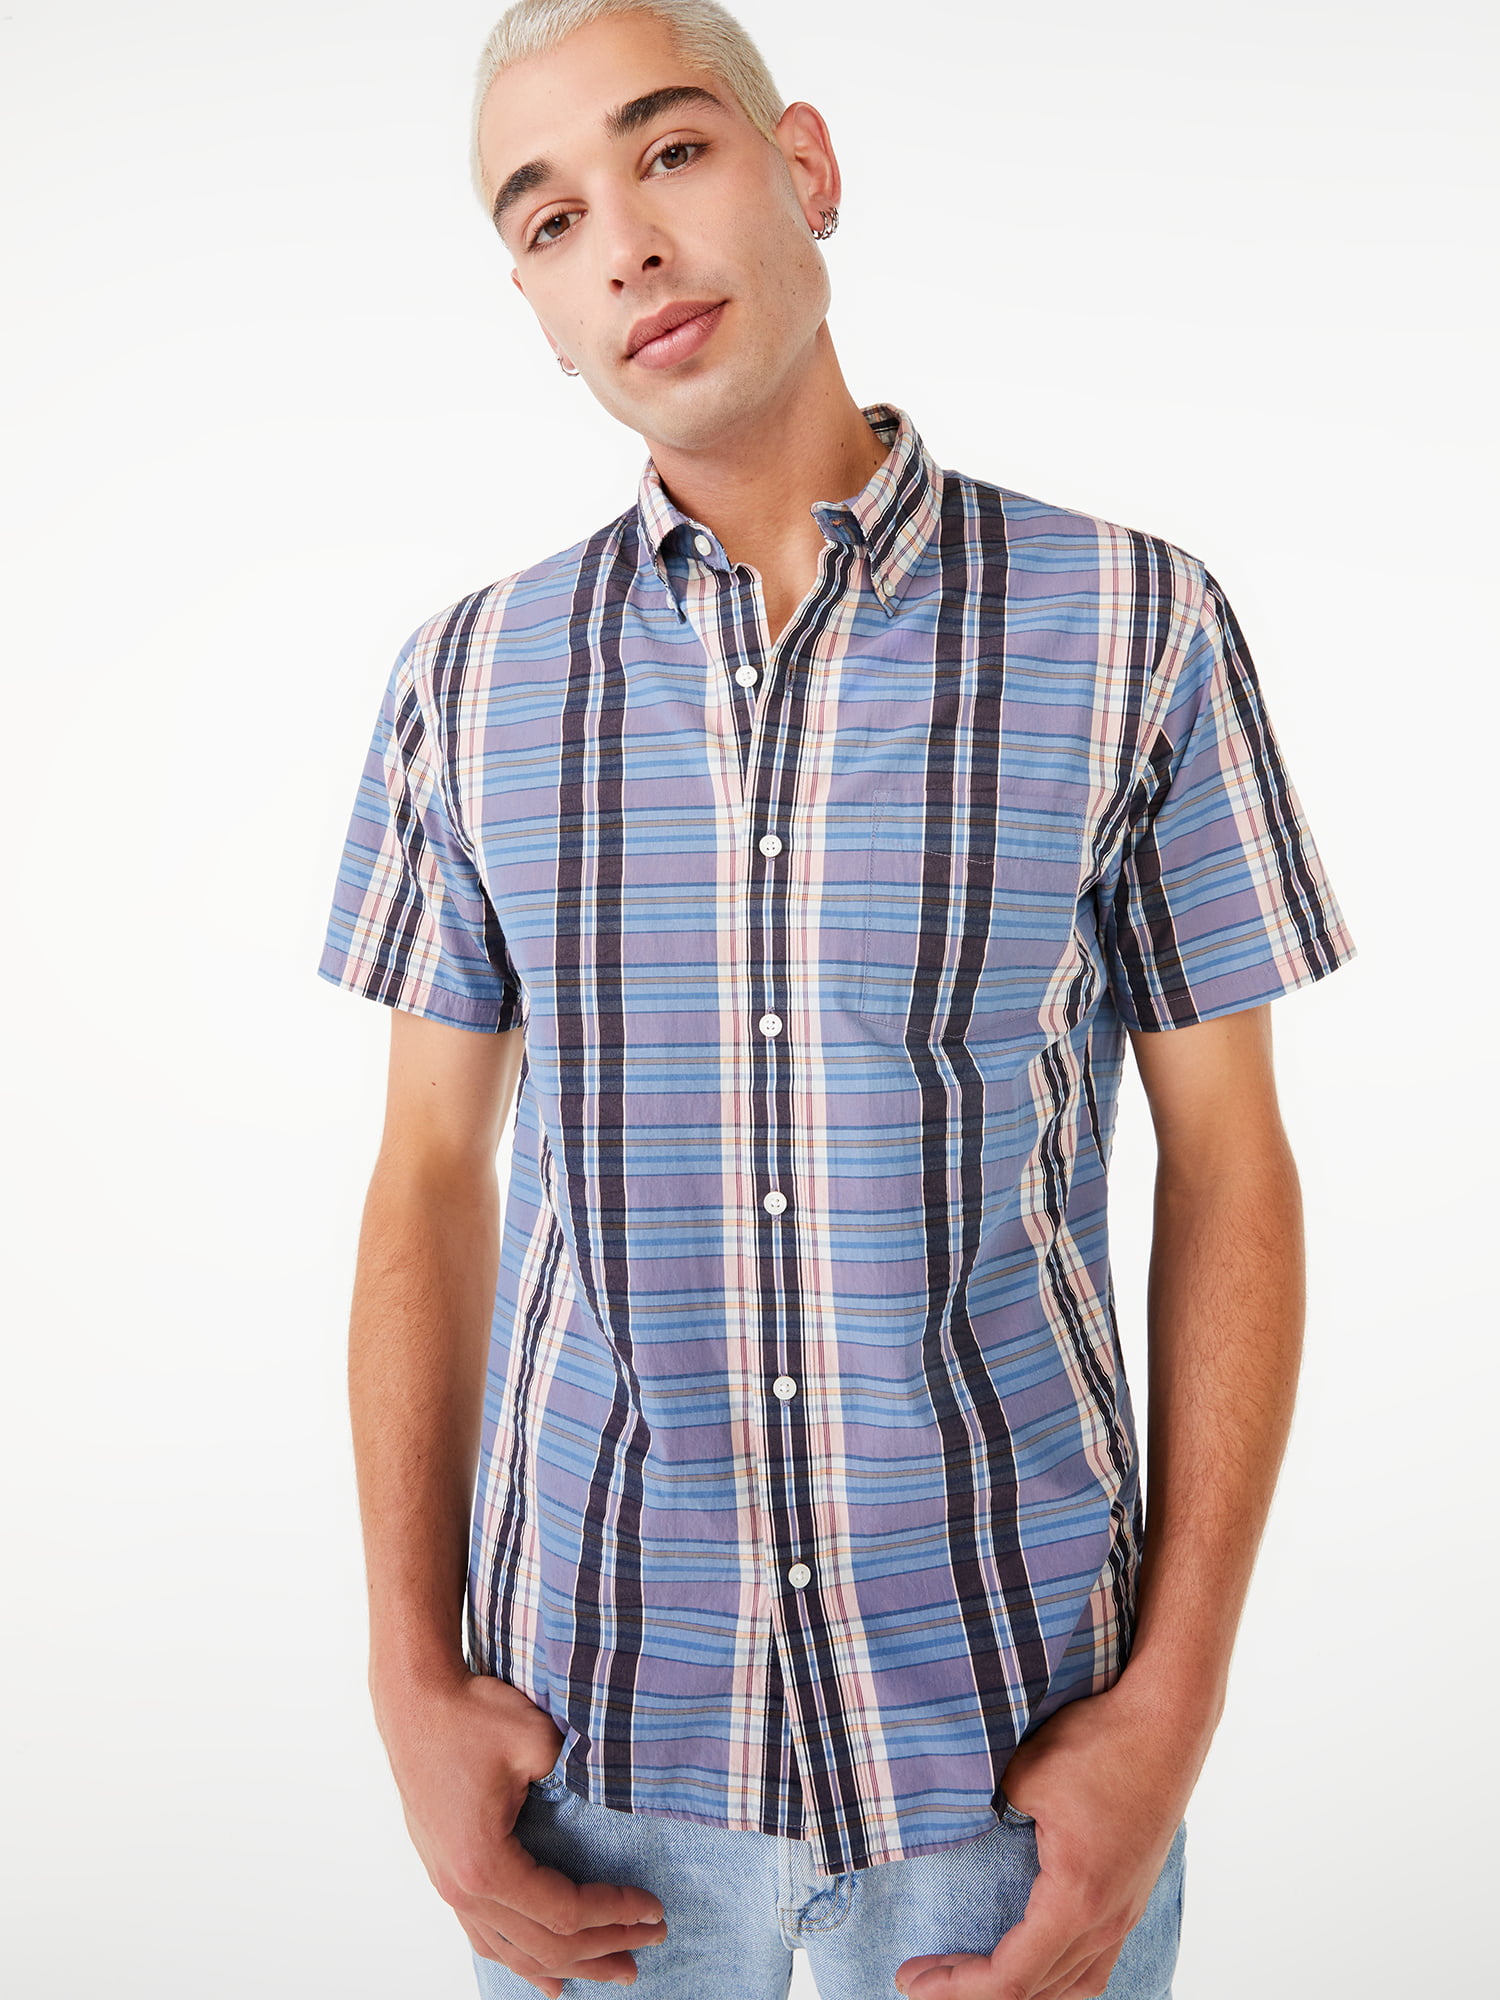 Freely Mens Summer Short-Sleeve Plus Size Print Button Down Shirt